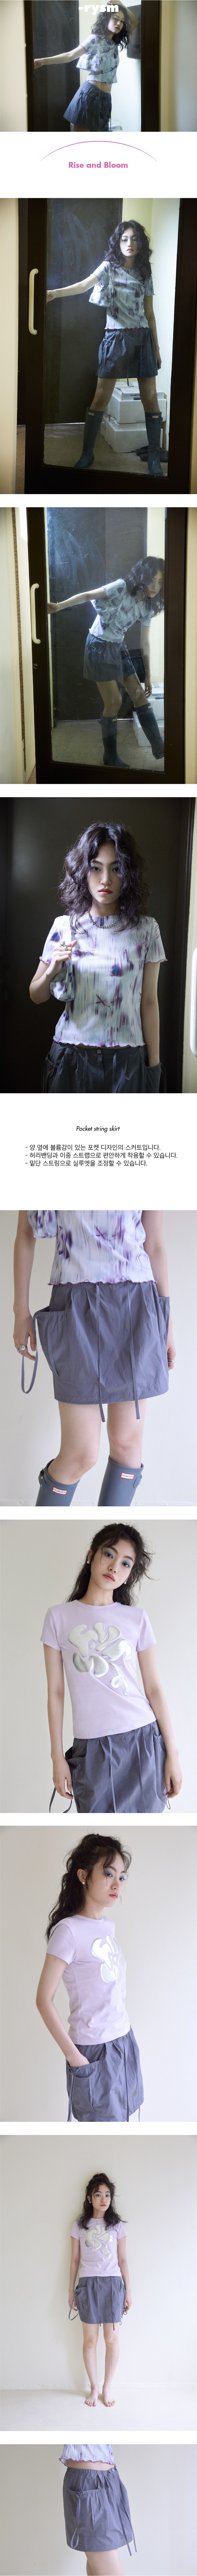 Pocket string skirt - charcoal